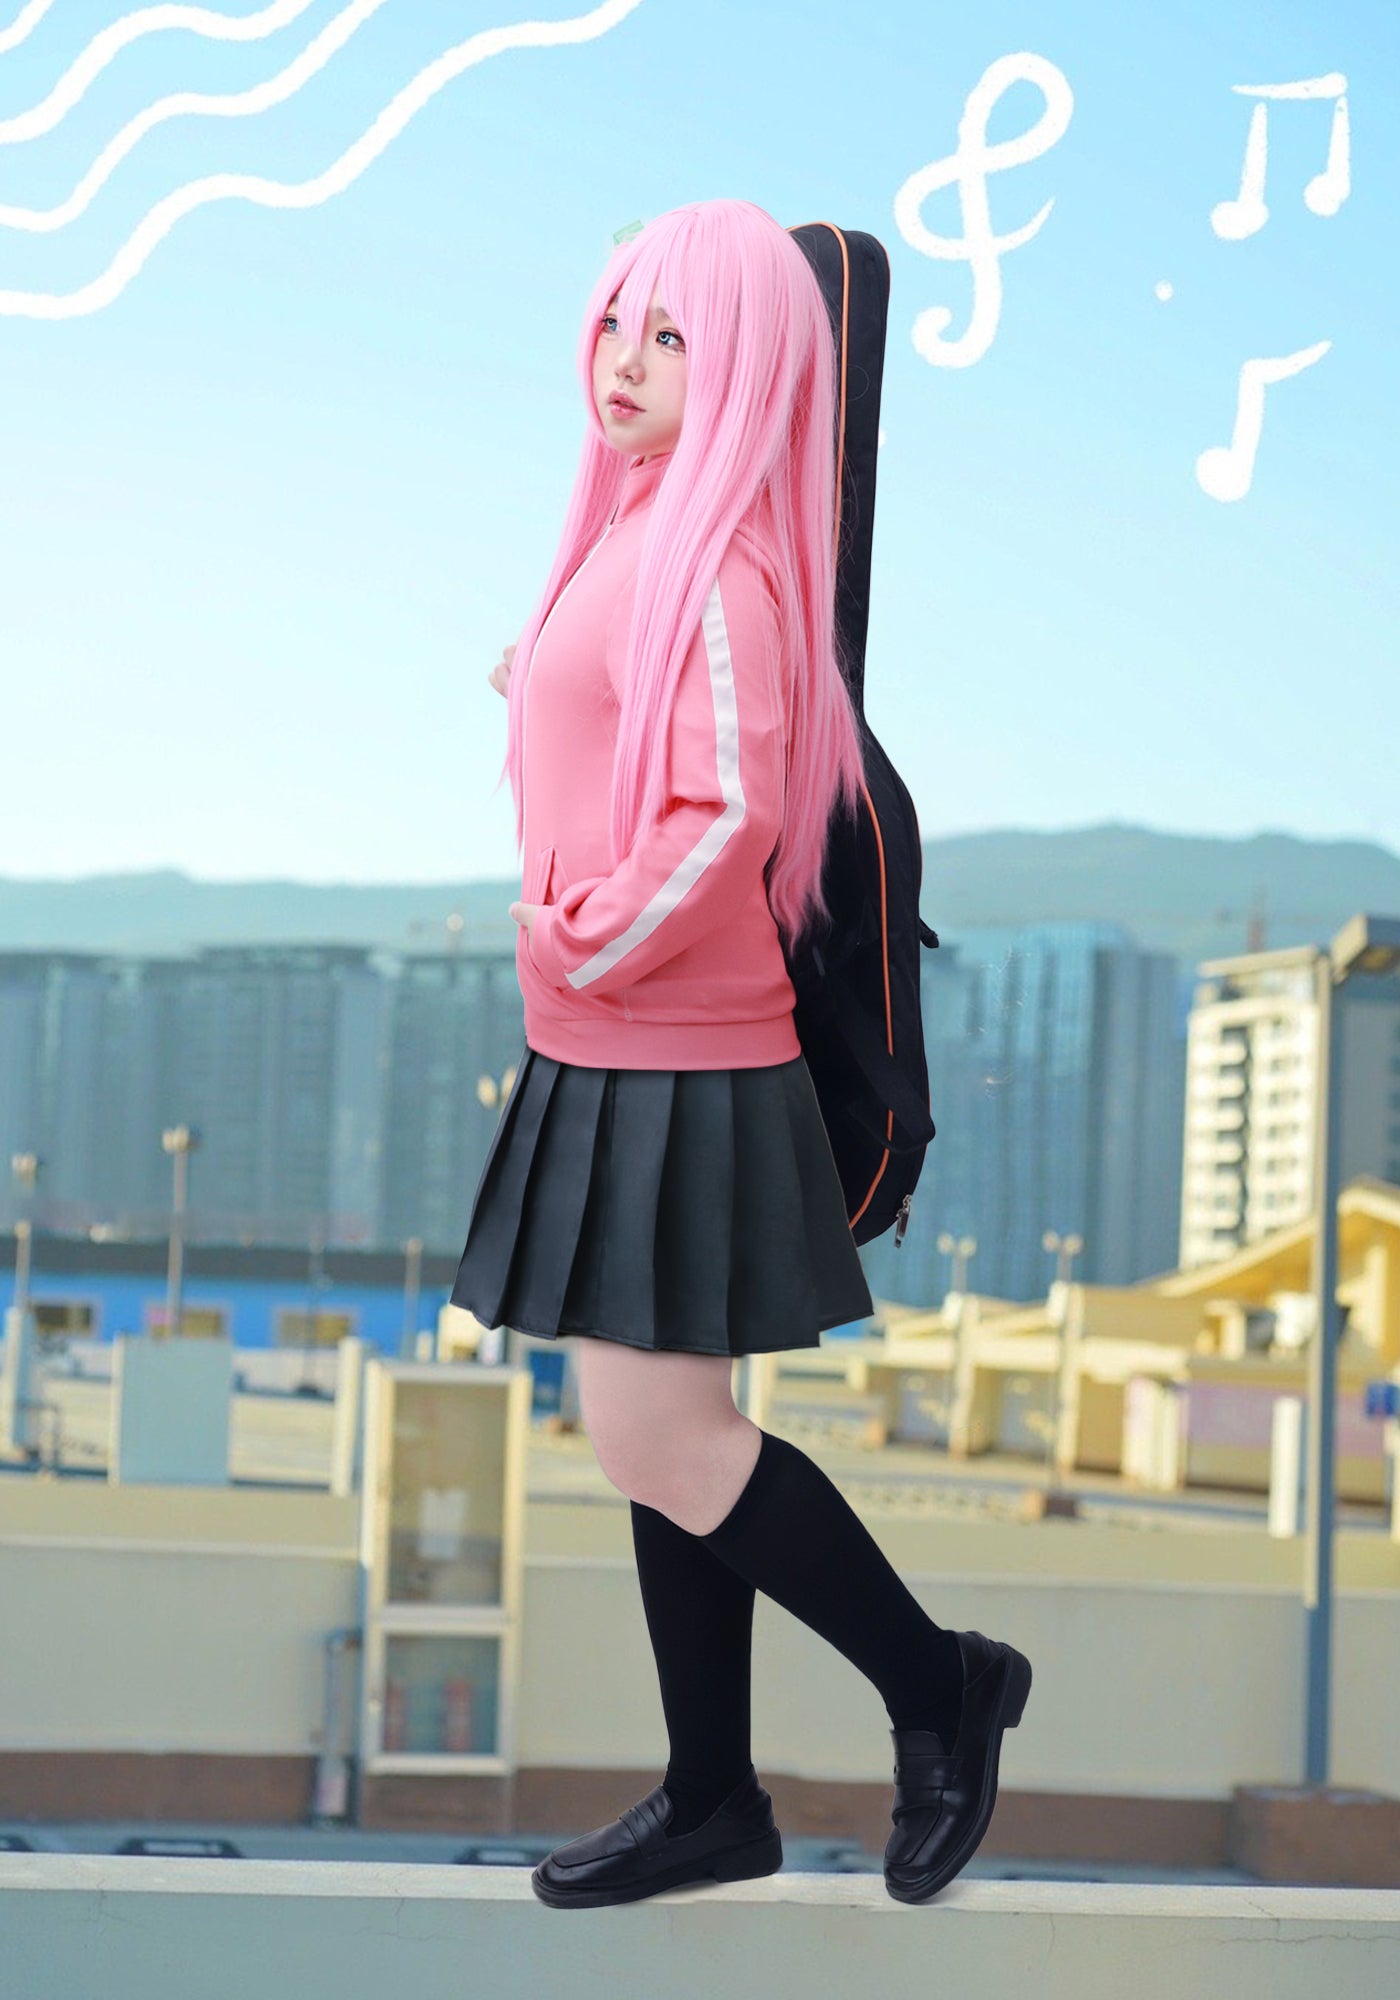 Gotou Hitori Cosplay Bocchi The Rock Gotou Hitori Cosplay Costume JK  Uniform Pink Jacket Skirt Wig Suit Halloween Women Clothes